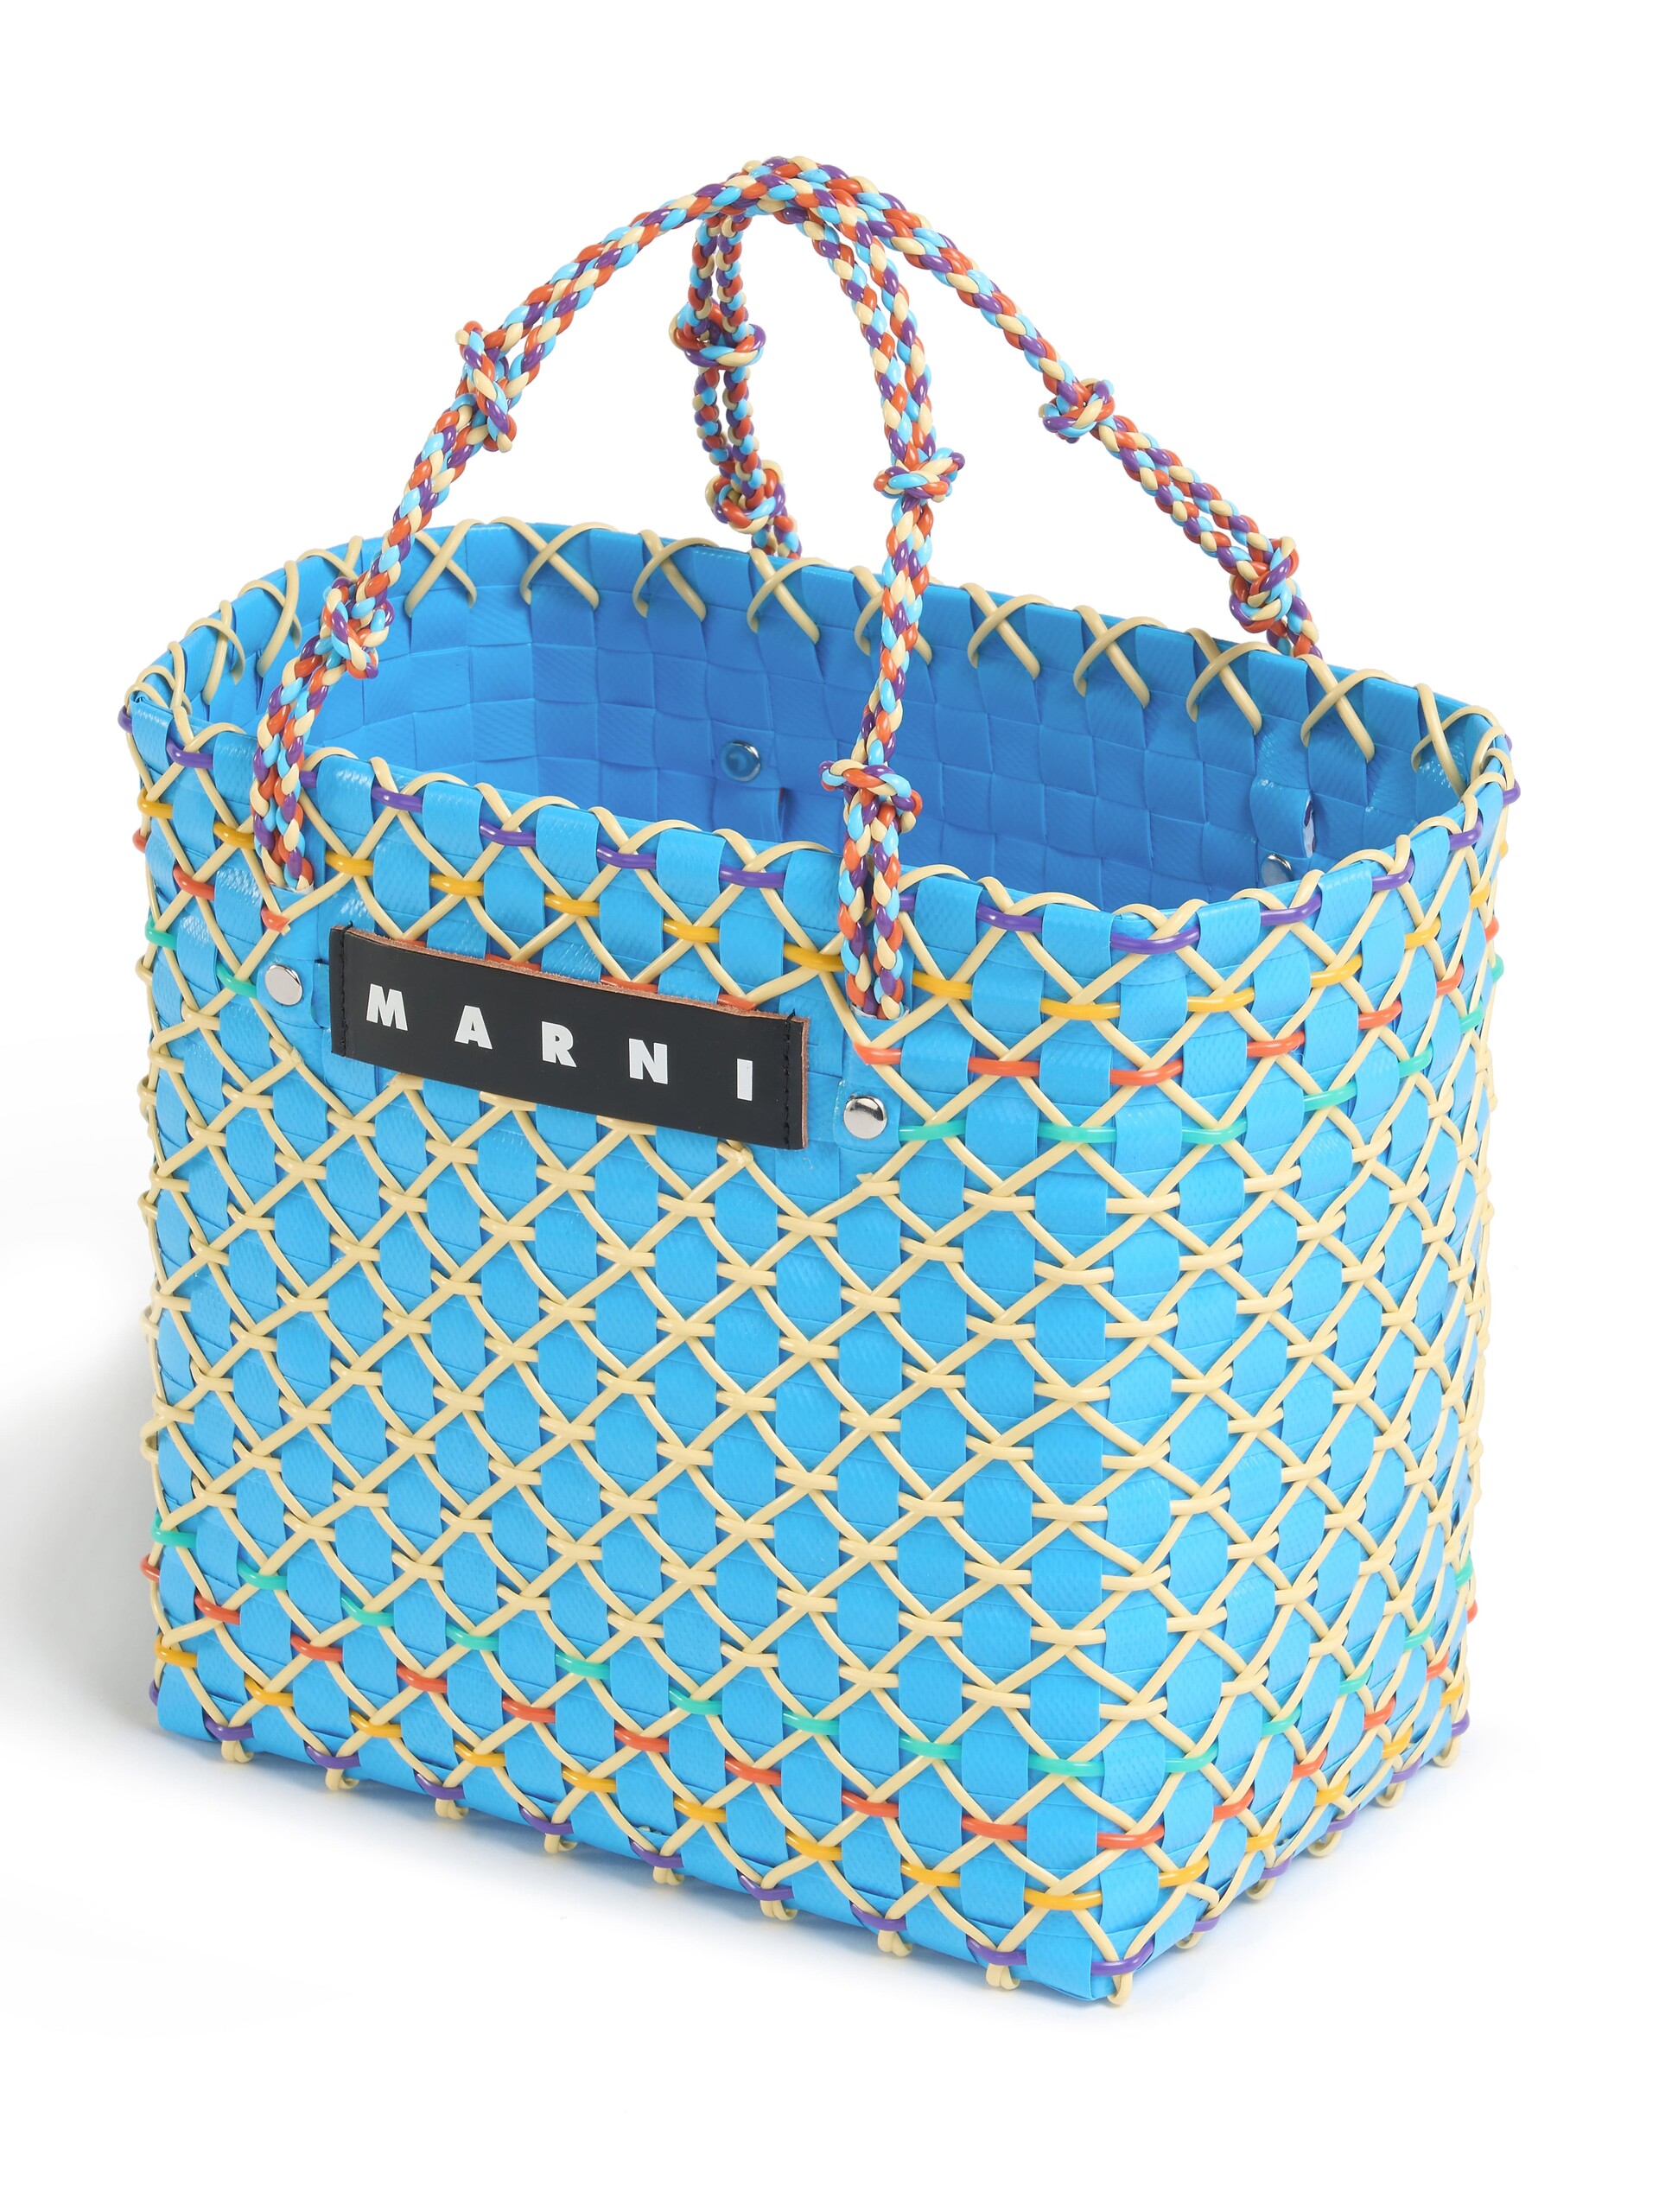 Bolso MARNI MARKET CAKE BASKET azul - Bolsos shopper - Image 4